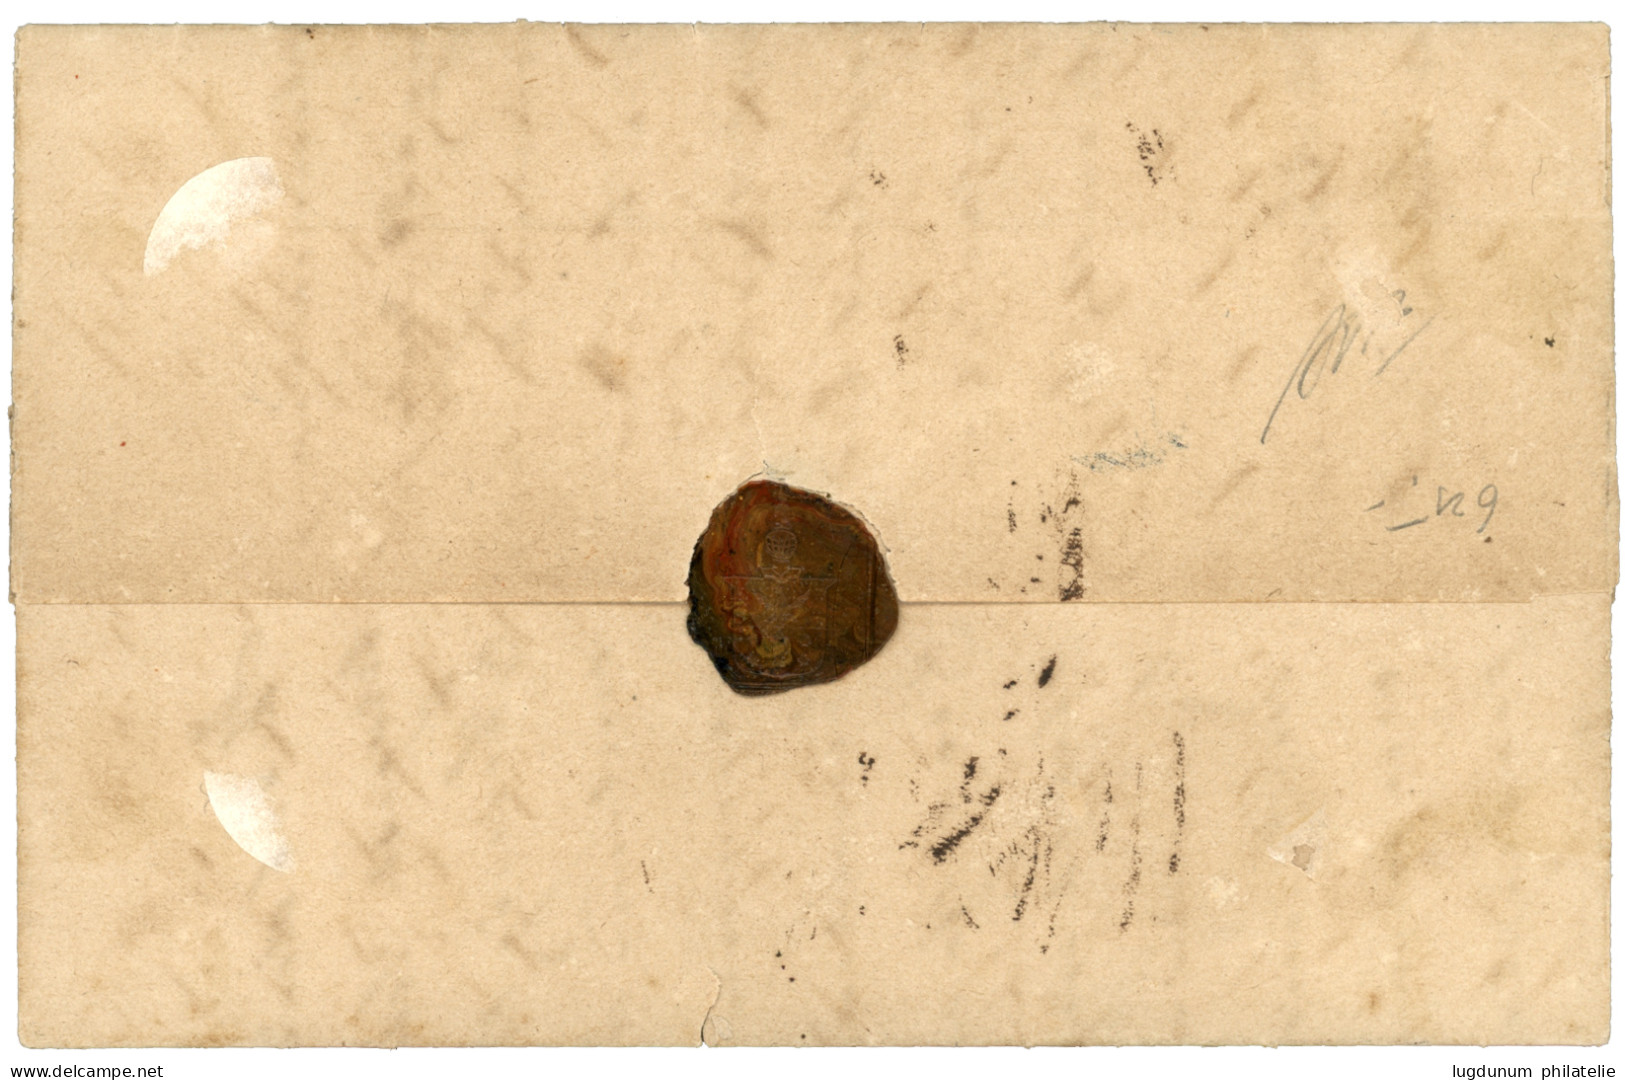 1849 Superb Boxed Blue Cachet NEDERLAND OVER MARSEILLE On Entire Letter From UTRECHT To BATAVIA. Vvf. - Netherlands Indies